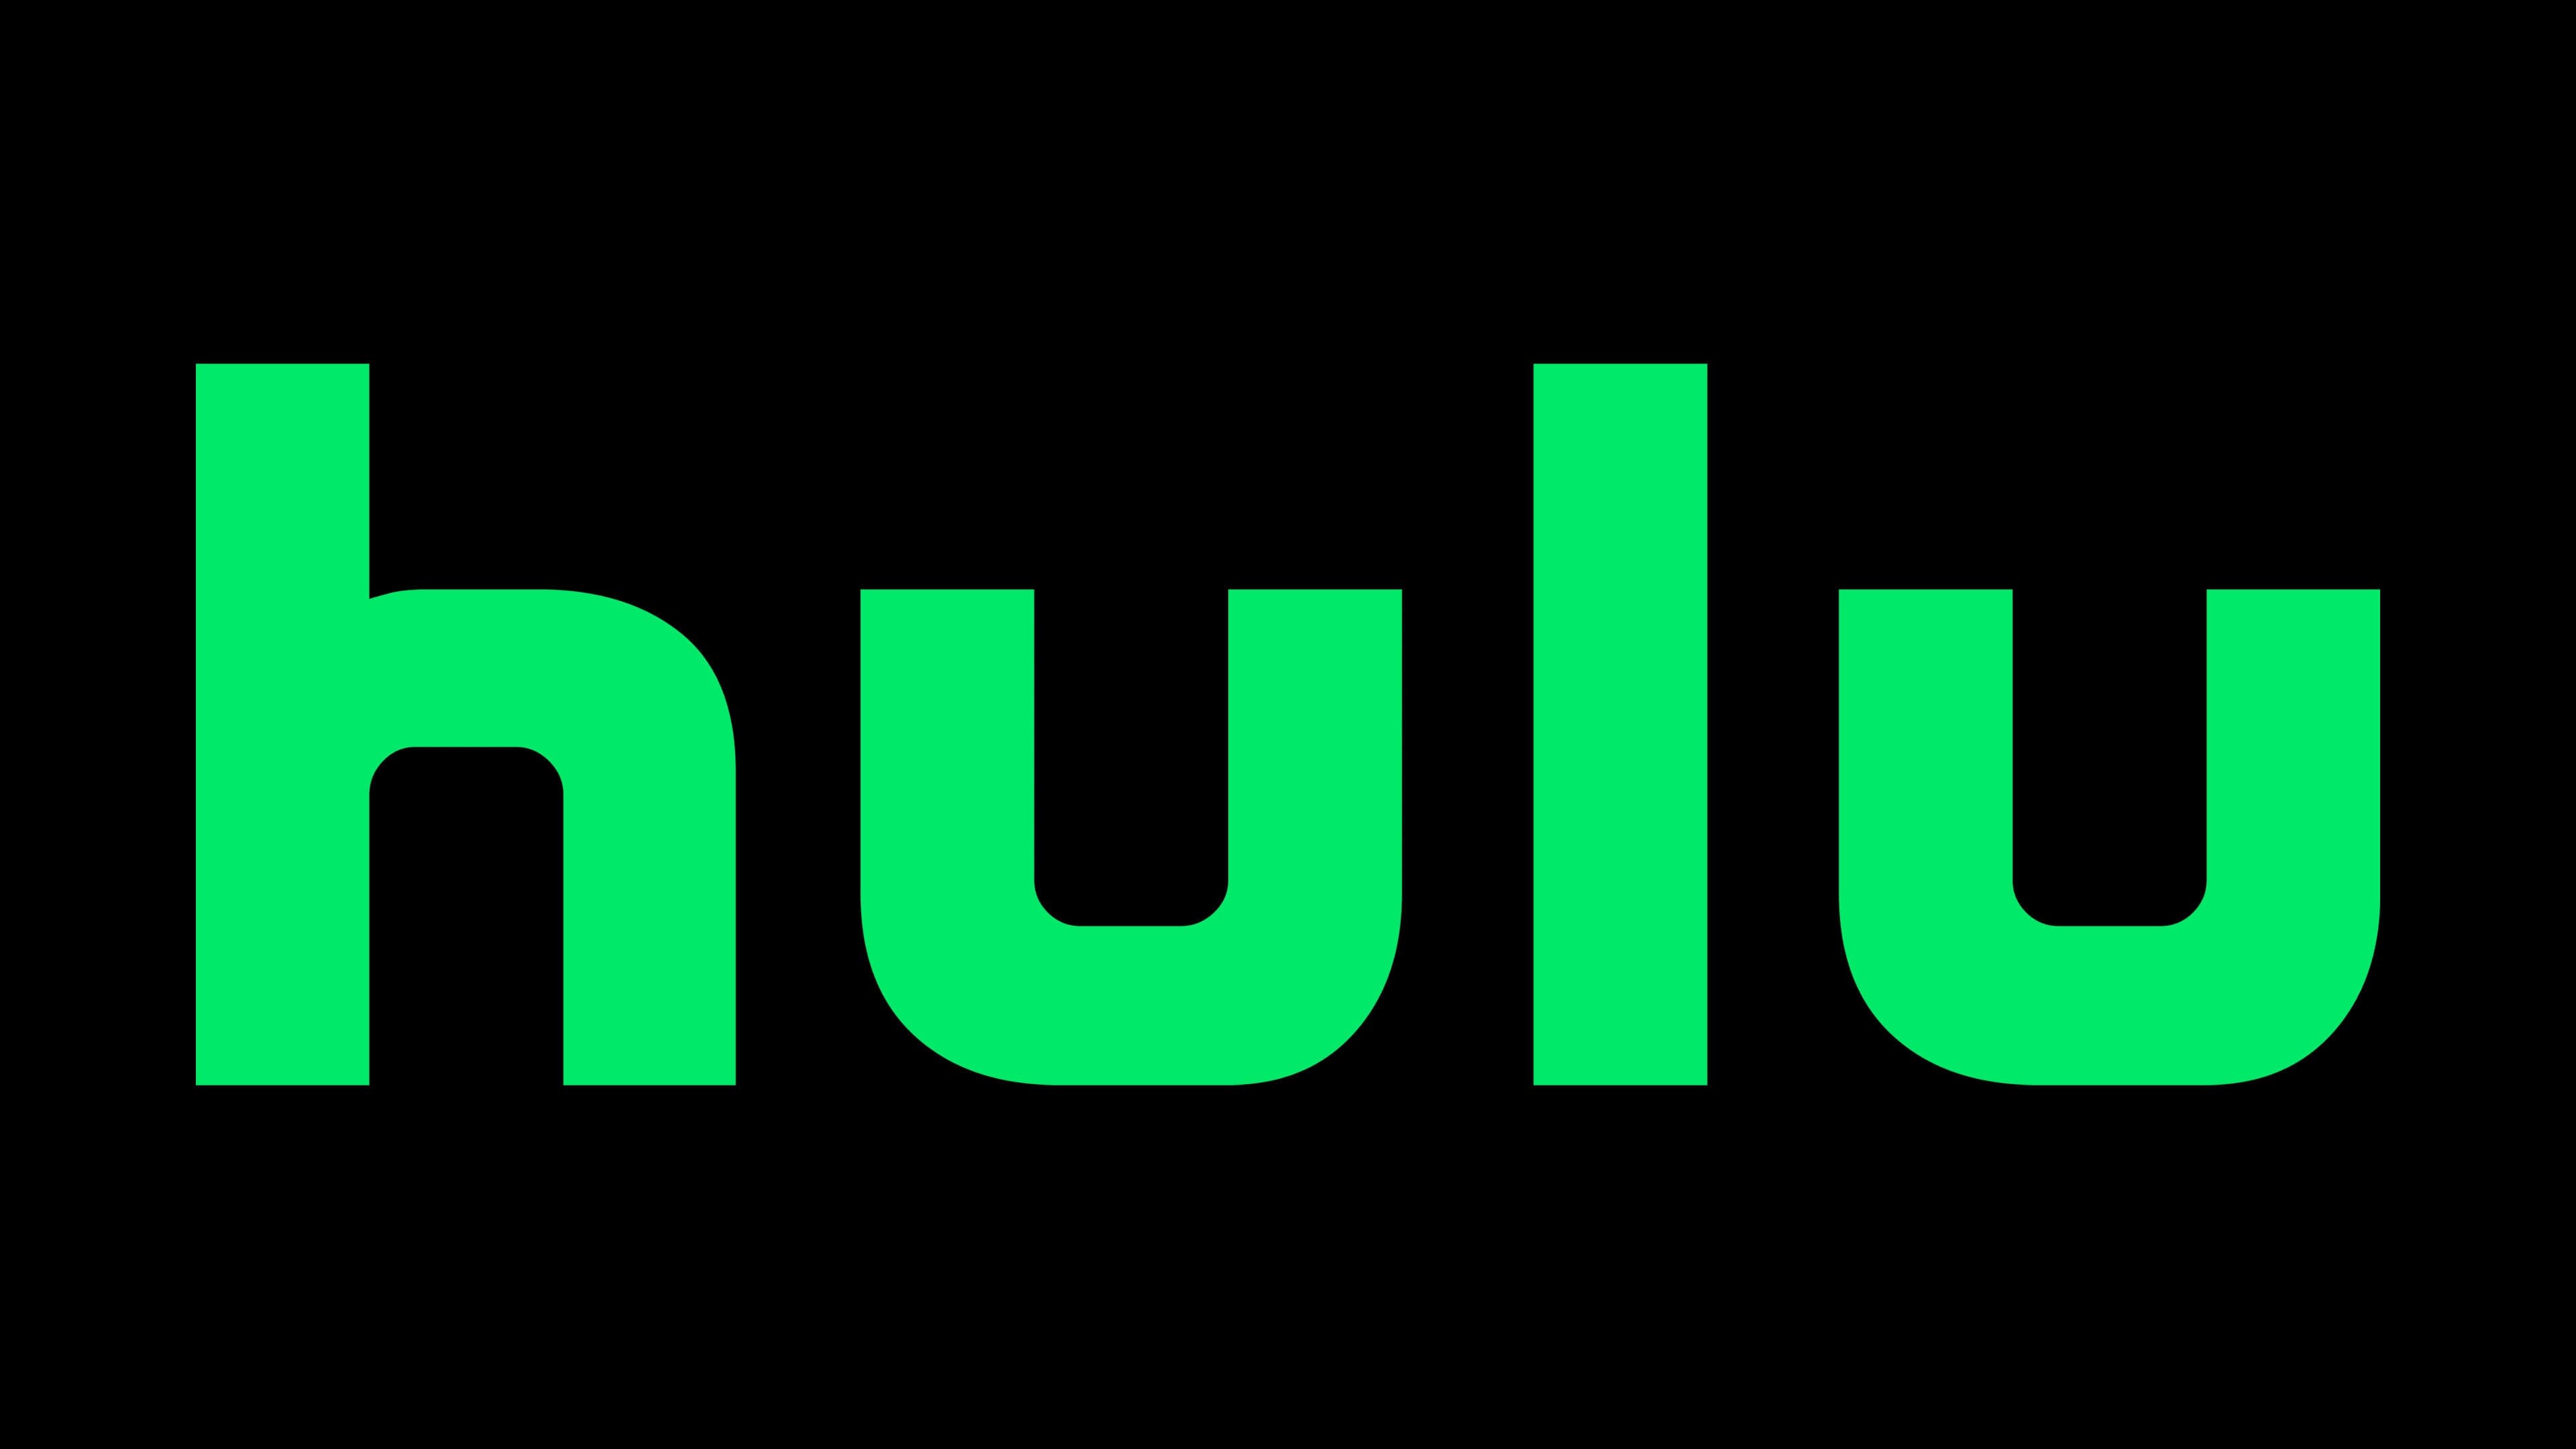 Hulu Logo, symbol, meaning, history, PNG, brand